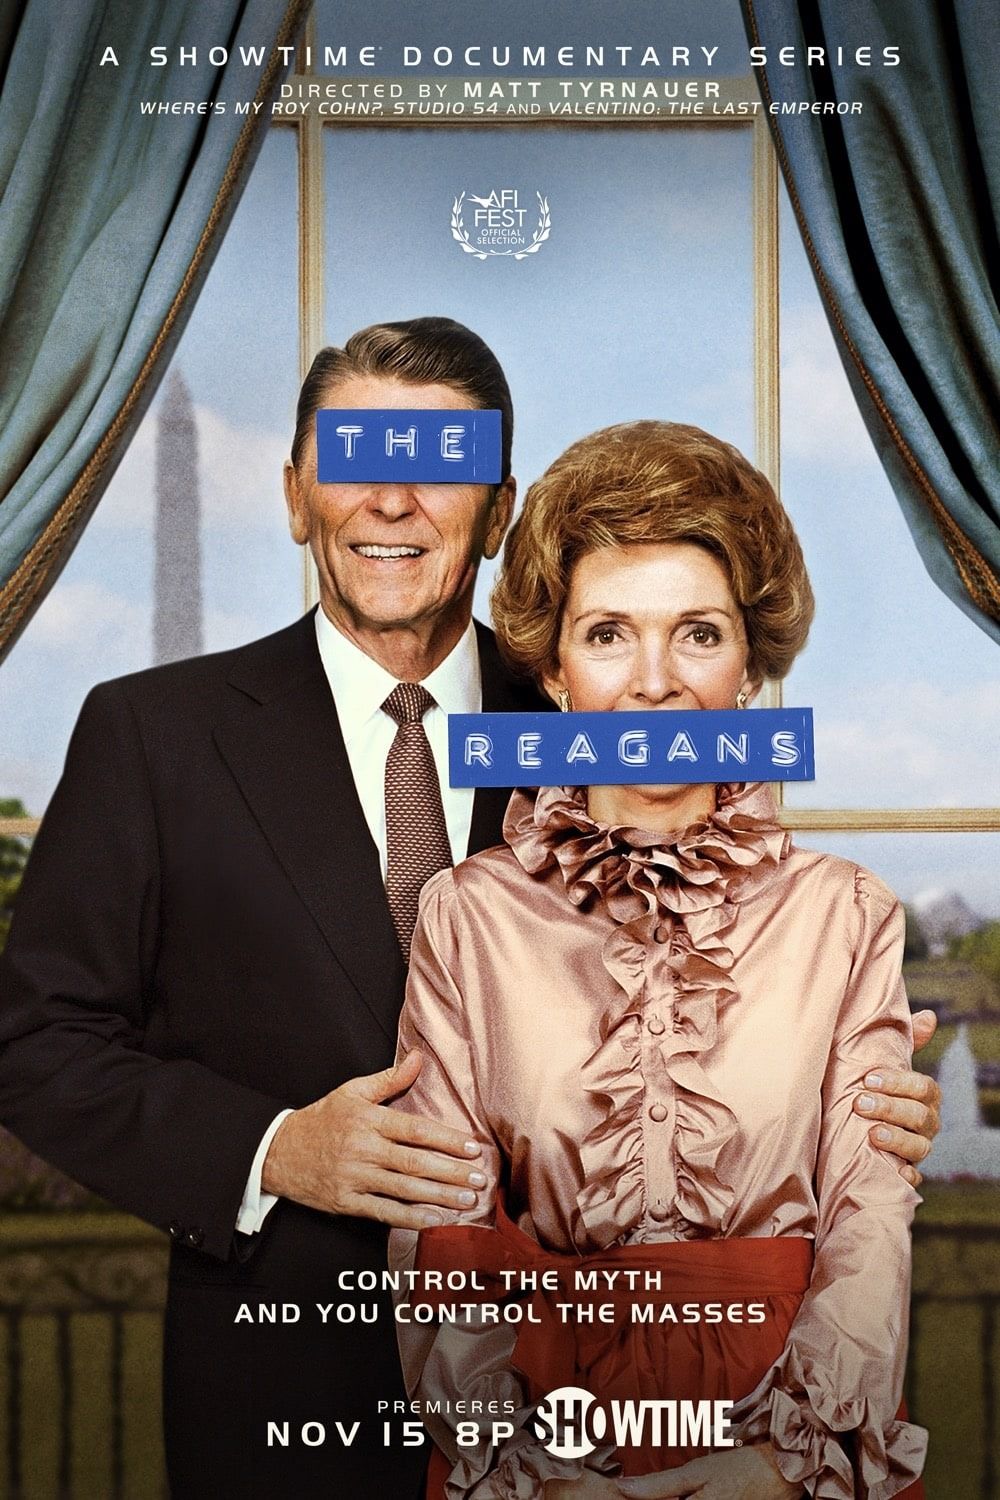 The Reagans ne zaman